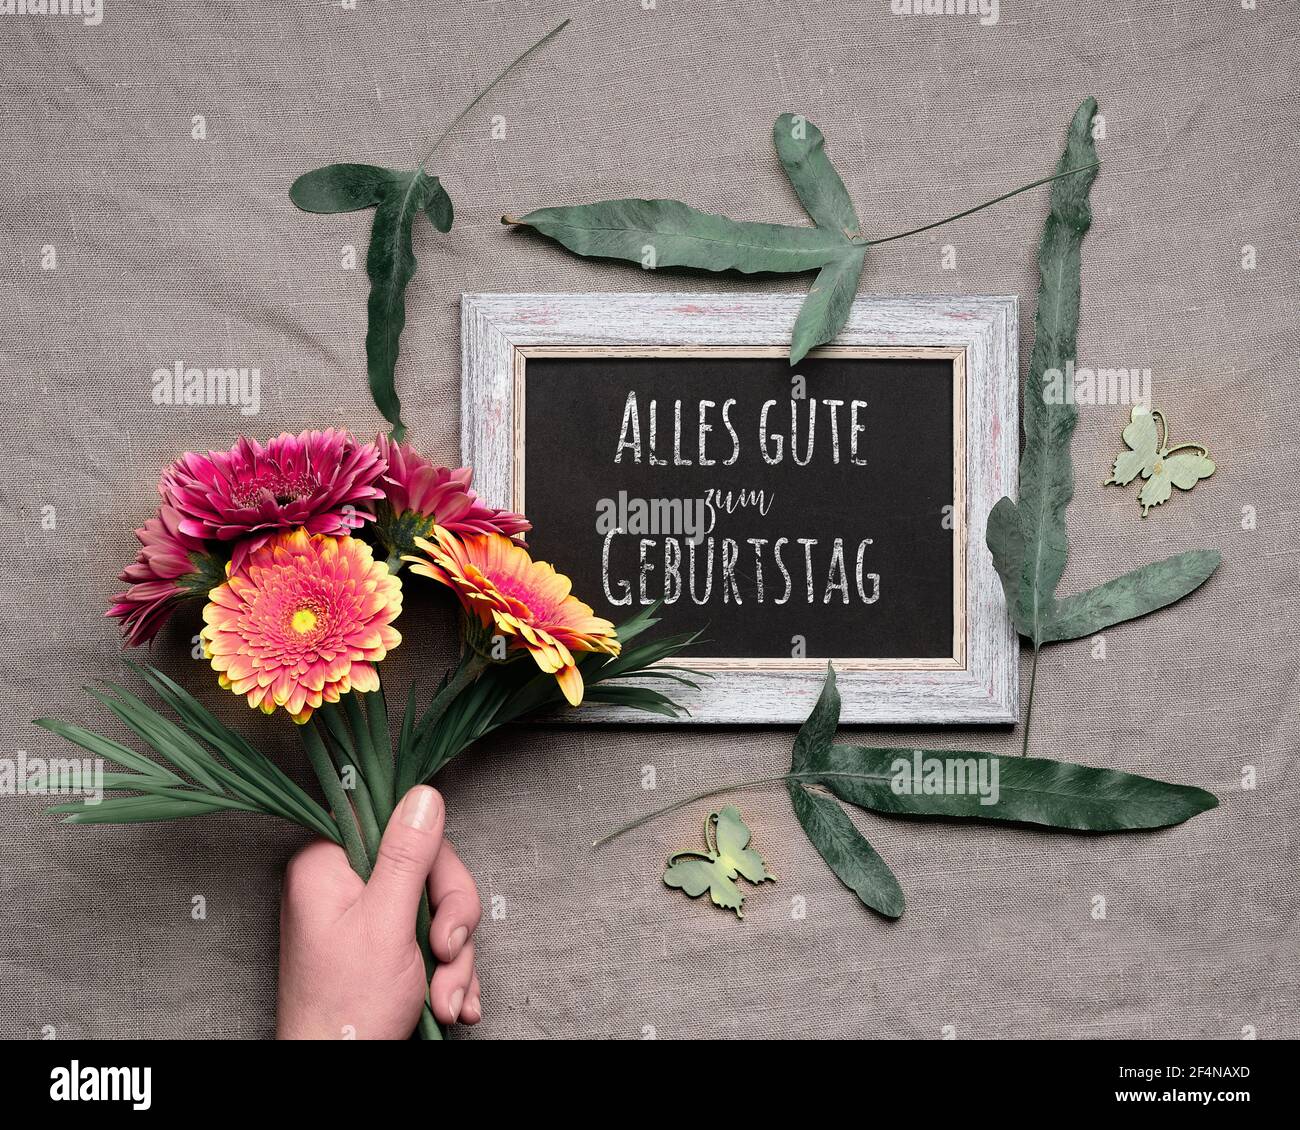 German text Alles gute zum Geburtstag on blackboard means Happy Birthday. Springtime background. Hand hold bunch of vibrant gerbera flowers, exotic Stock Photo